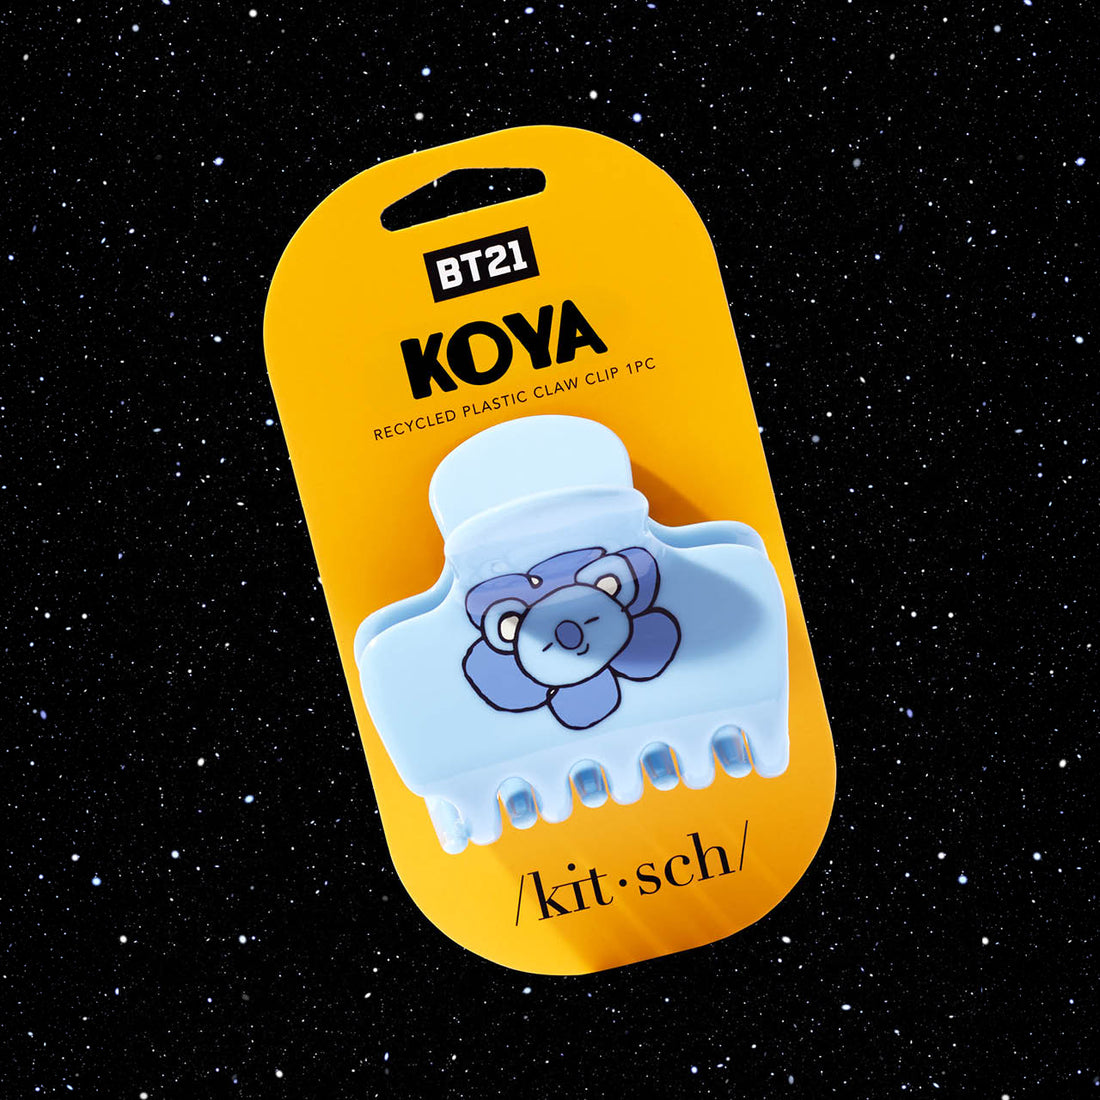 BT21 x Kitsch Recycled Plastic Puffy Claw Clip 1pc - Koya